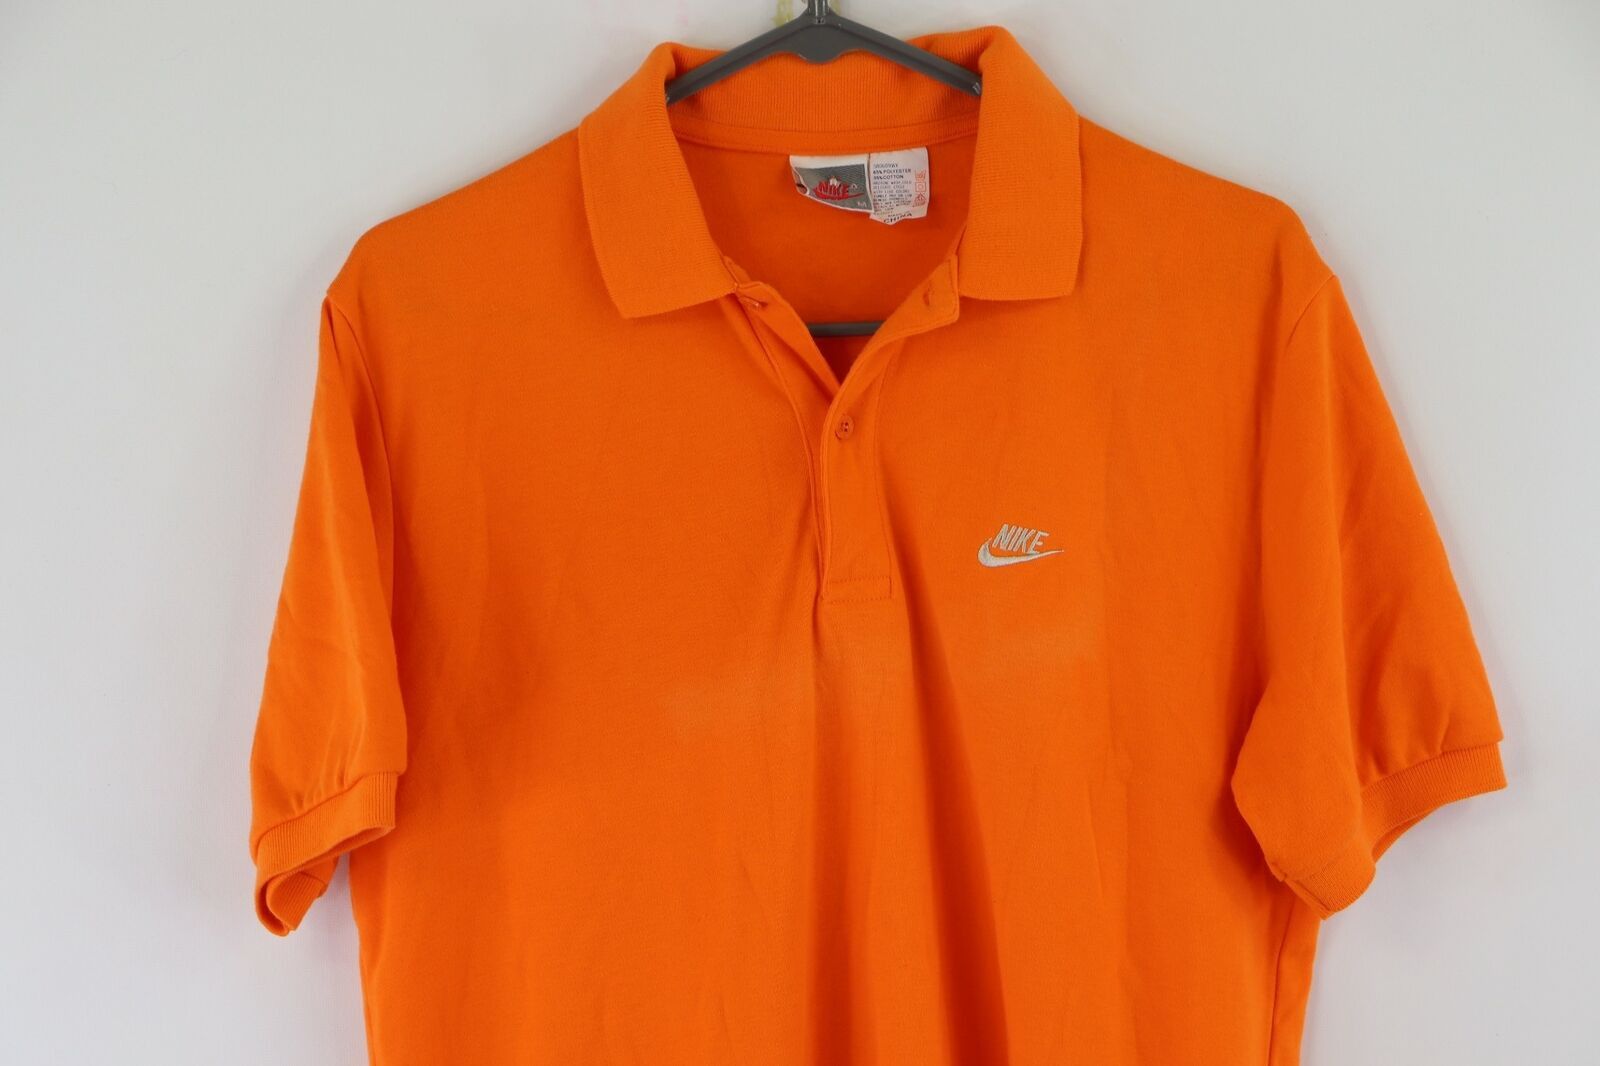 Nike Vintage 90s Nike Travis Scott Mini Swoosh Polo Shirt Orange Size US M / EU 48-50 / 2 - 2 Preview